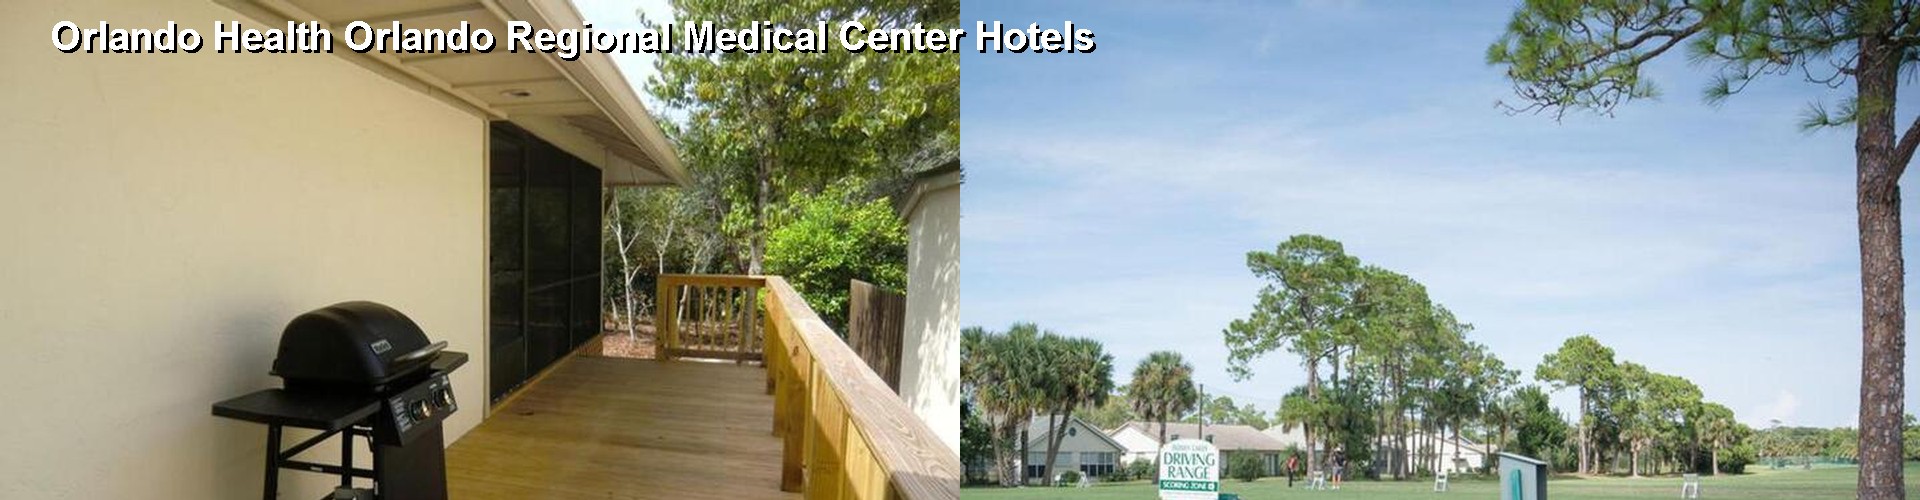 5 Best Hotels near Orlando Health Orlando Regional Medical Center